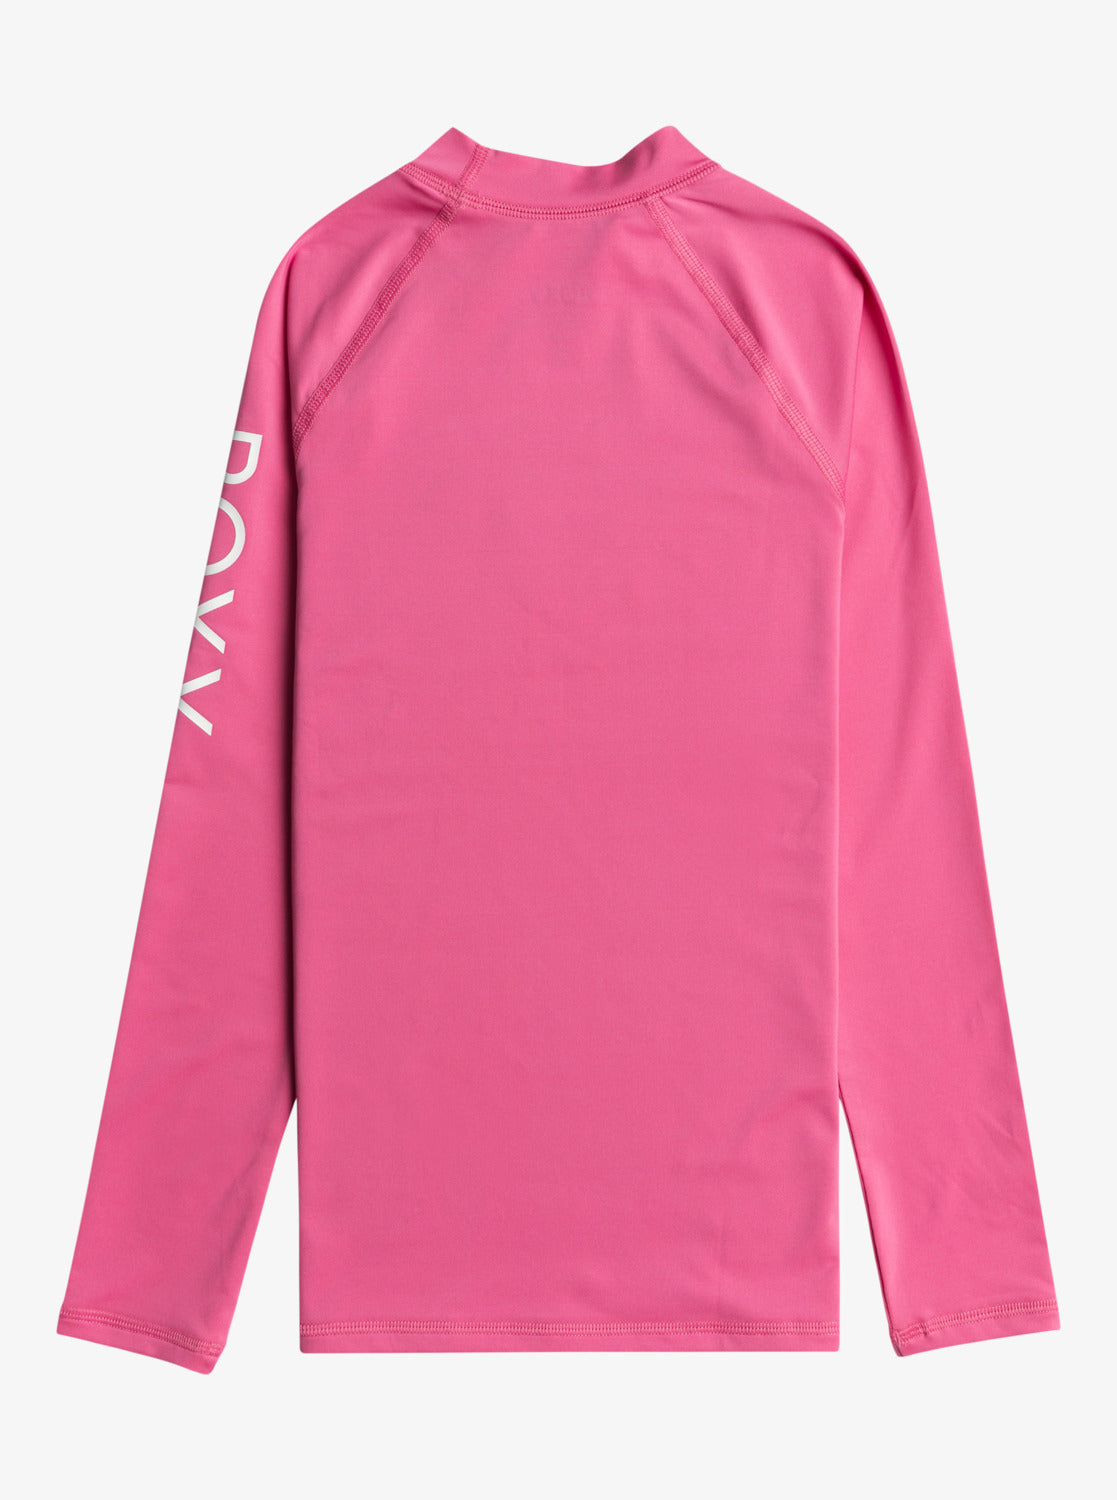 Roxy Whole Hearted Girls Long Sleeve UPF 50 Rash Vest in Shocking Pink